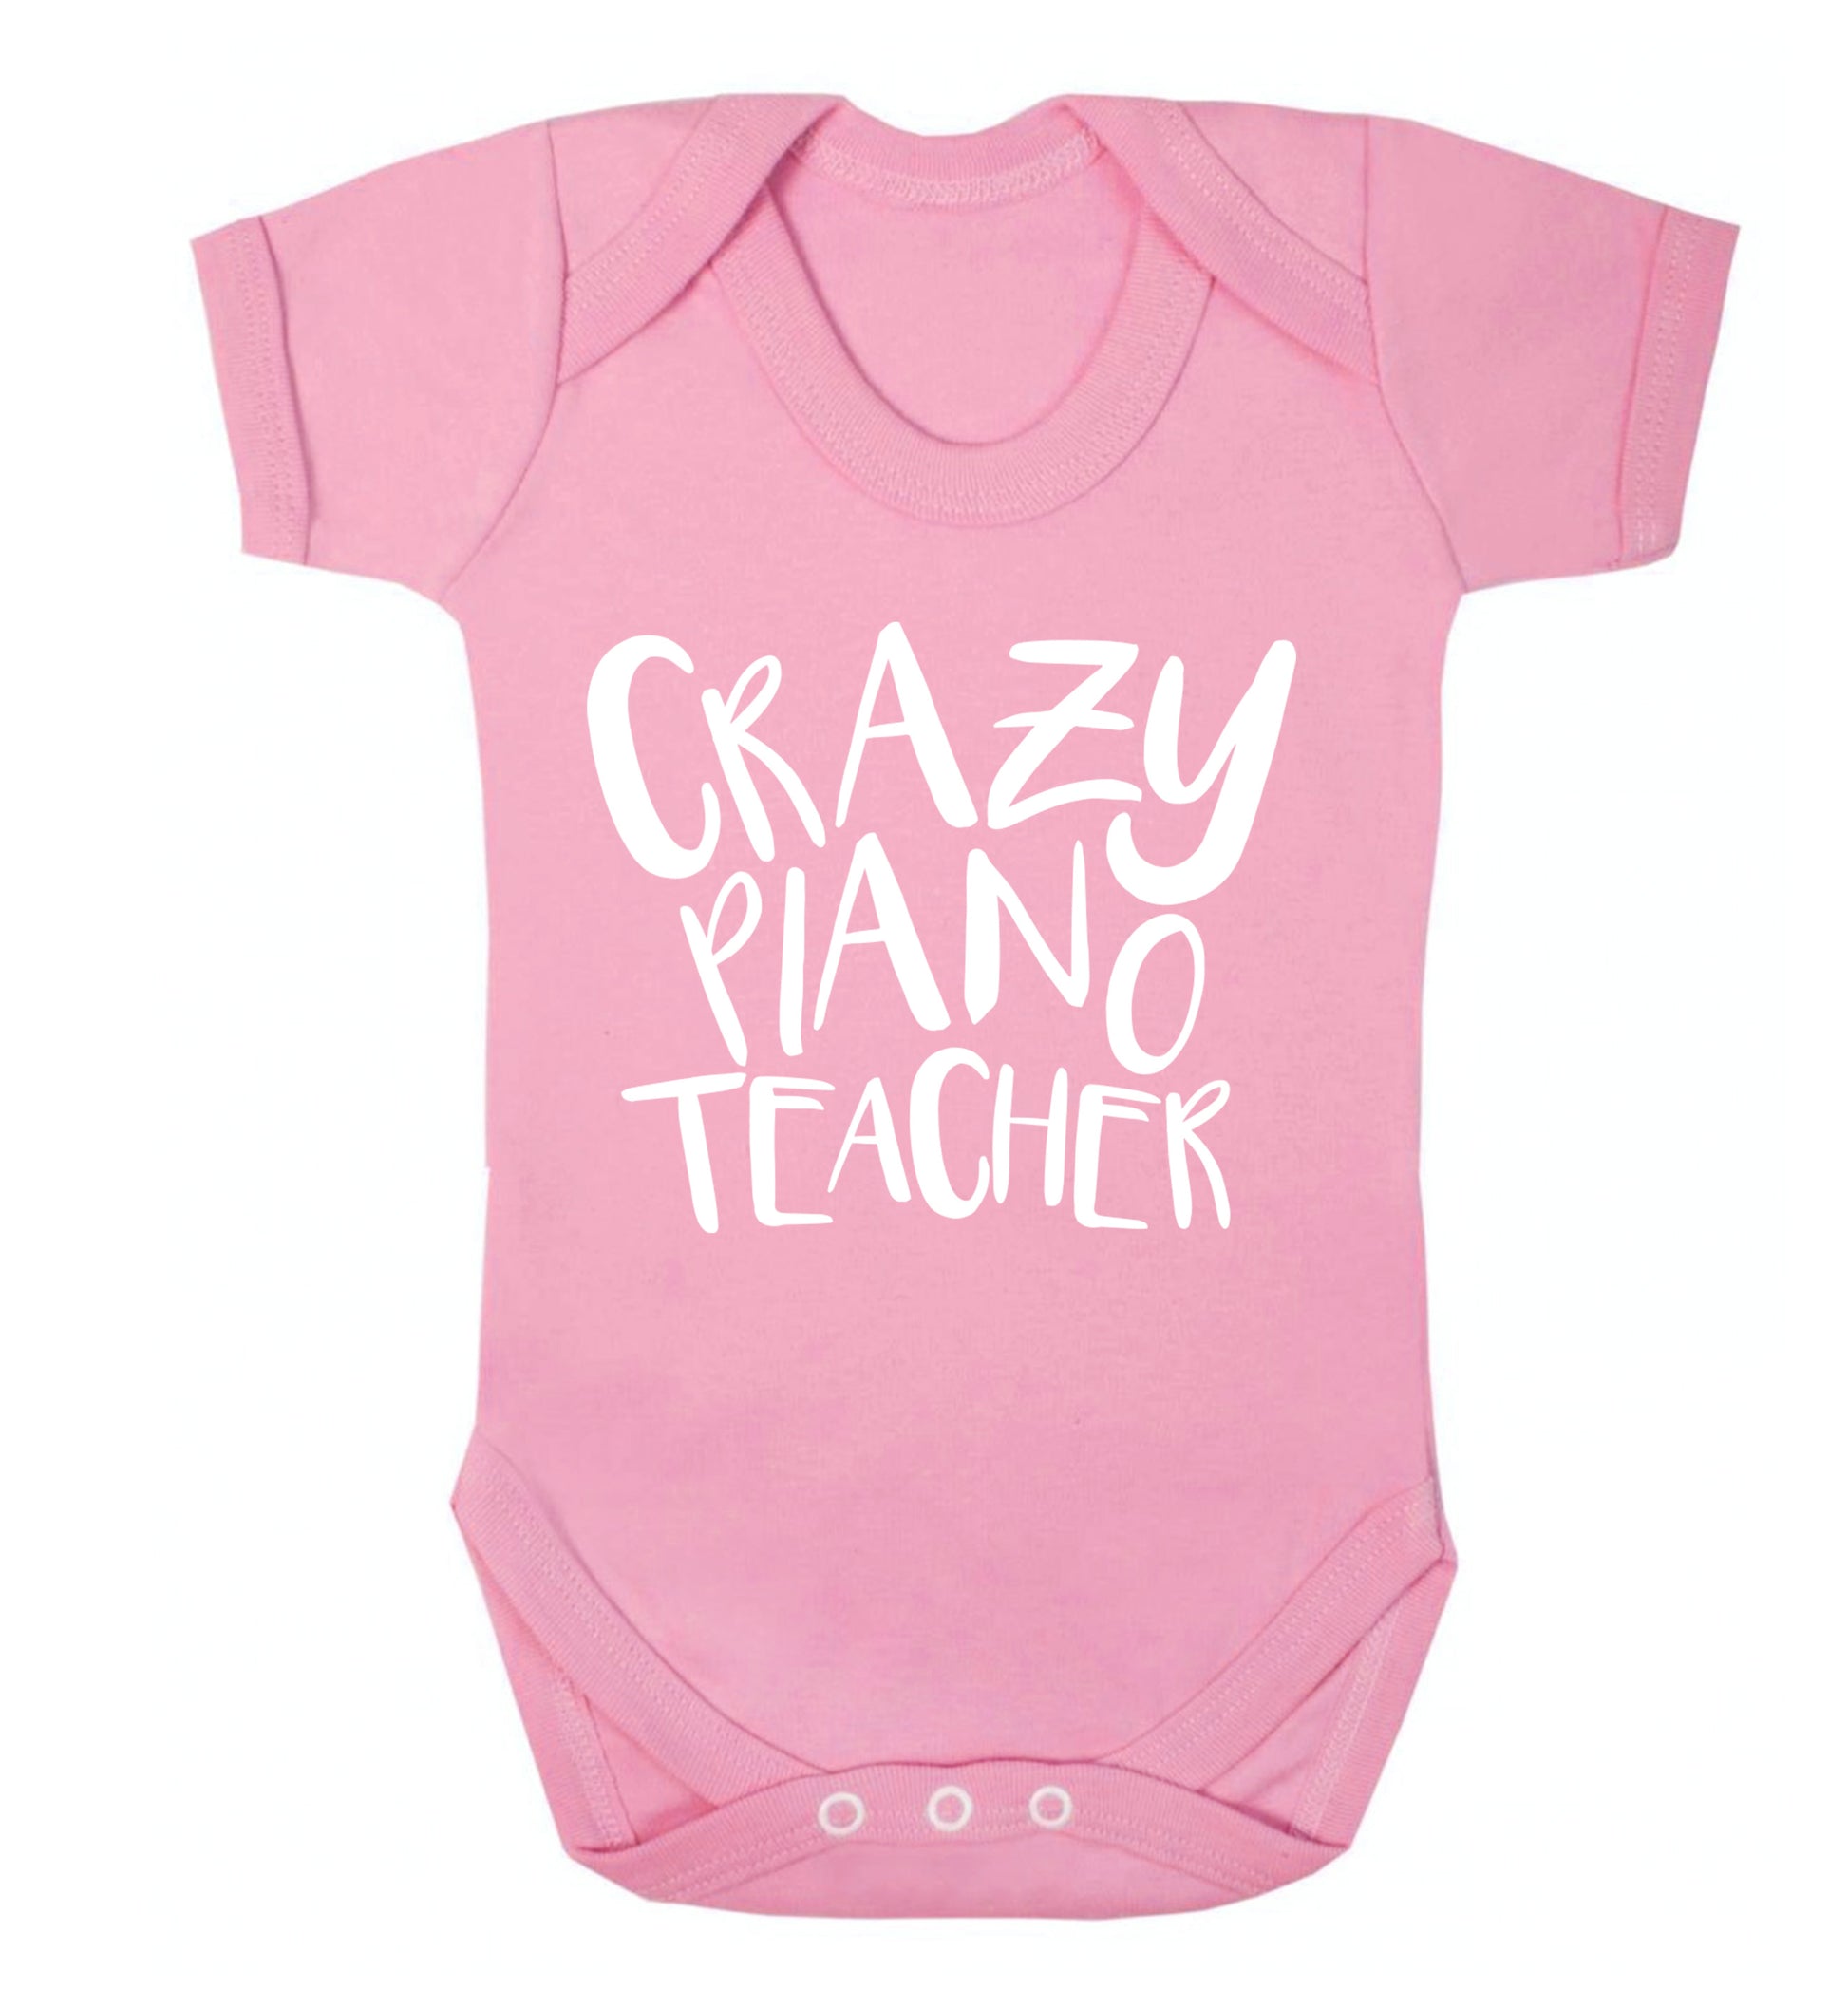 Crazy piano teacher Baby Vest pale pink 18-24 months